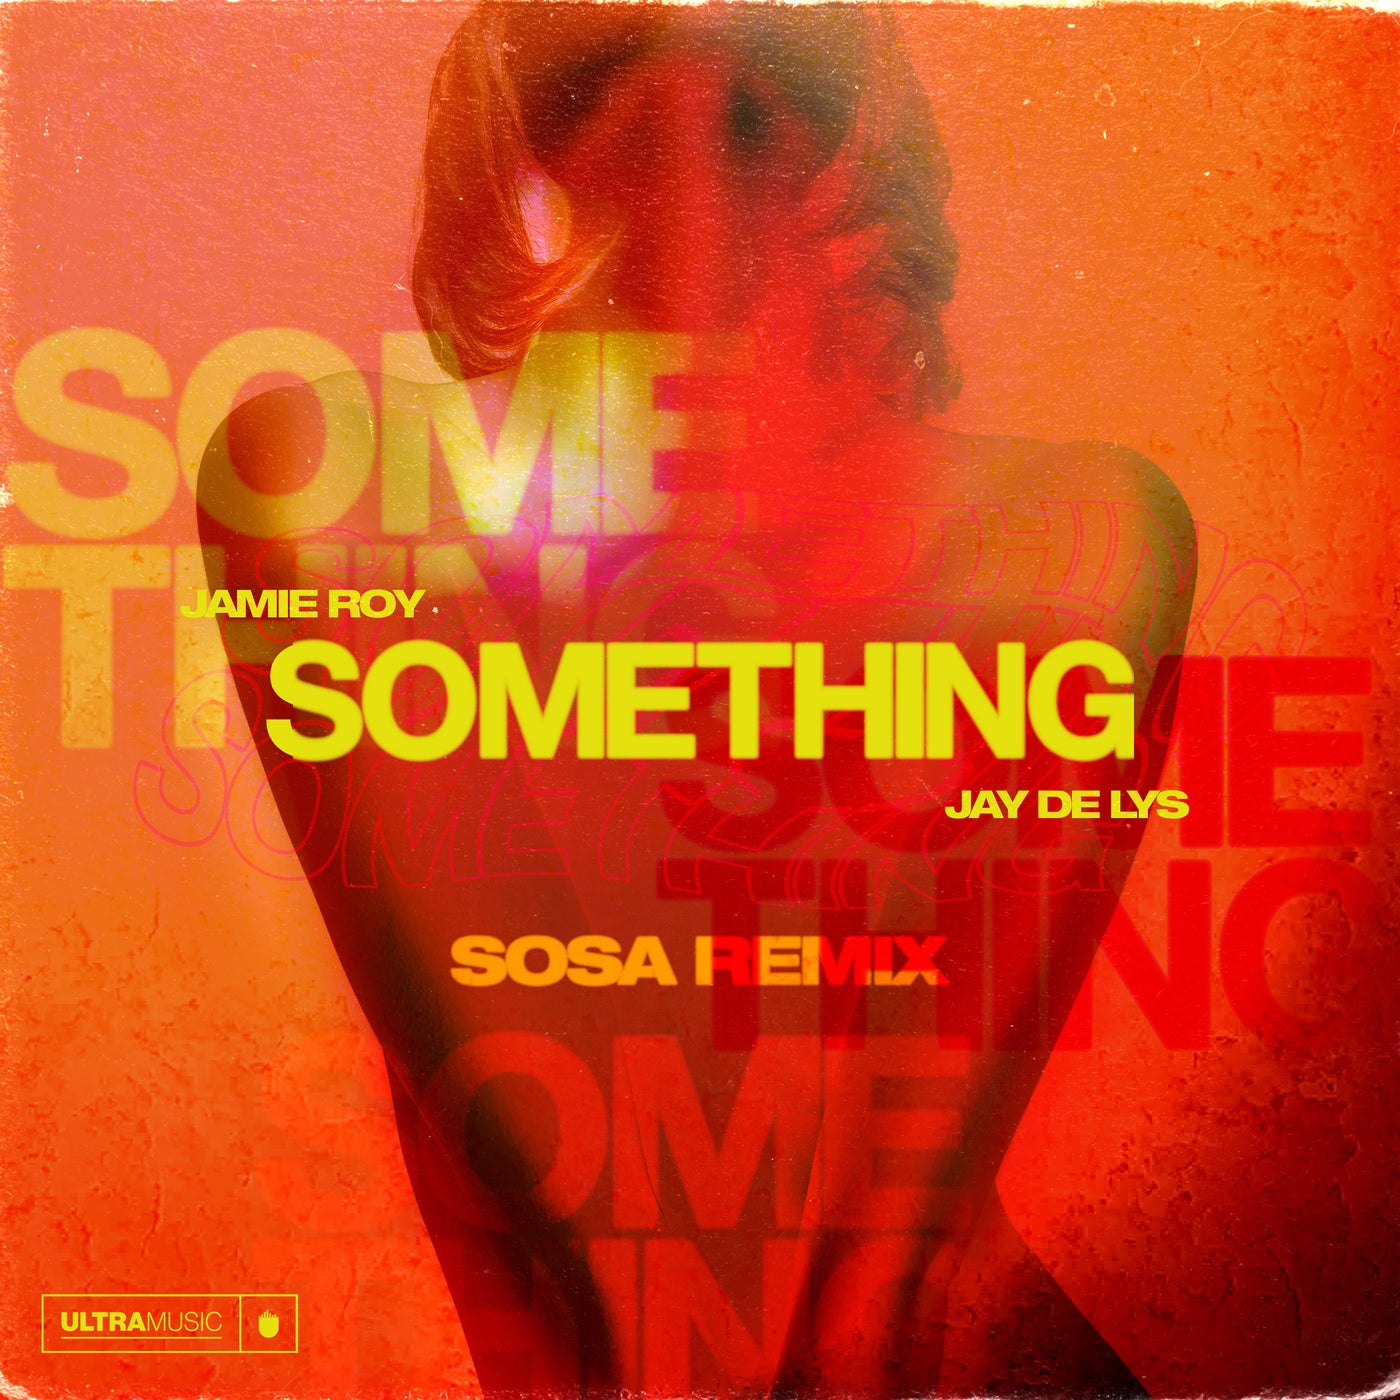 Jamie Roy, Jay de Lys – Something – Sosa Remix [UL02832]